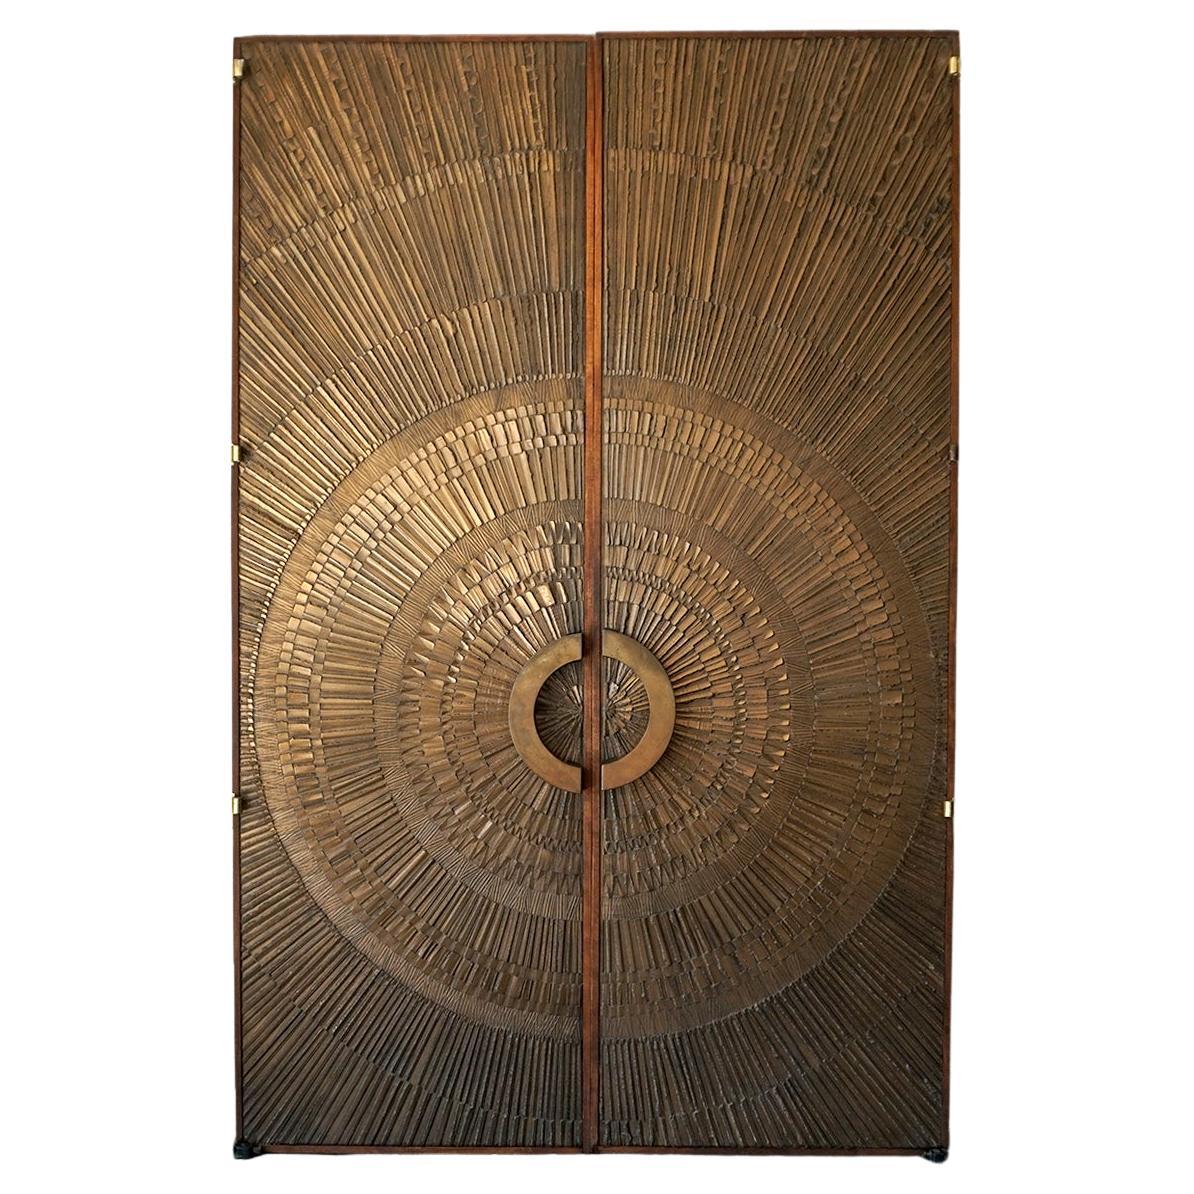 Heroic Sunburst Doors in Bronze & Resin by Billy Joe McCarrol & David Gillespie